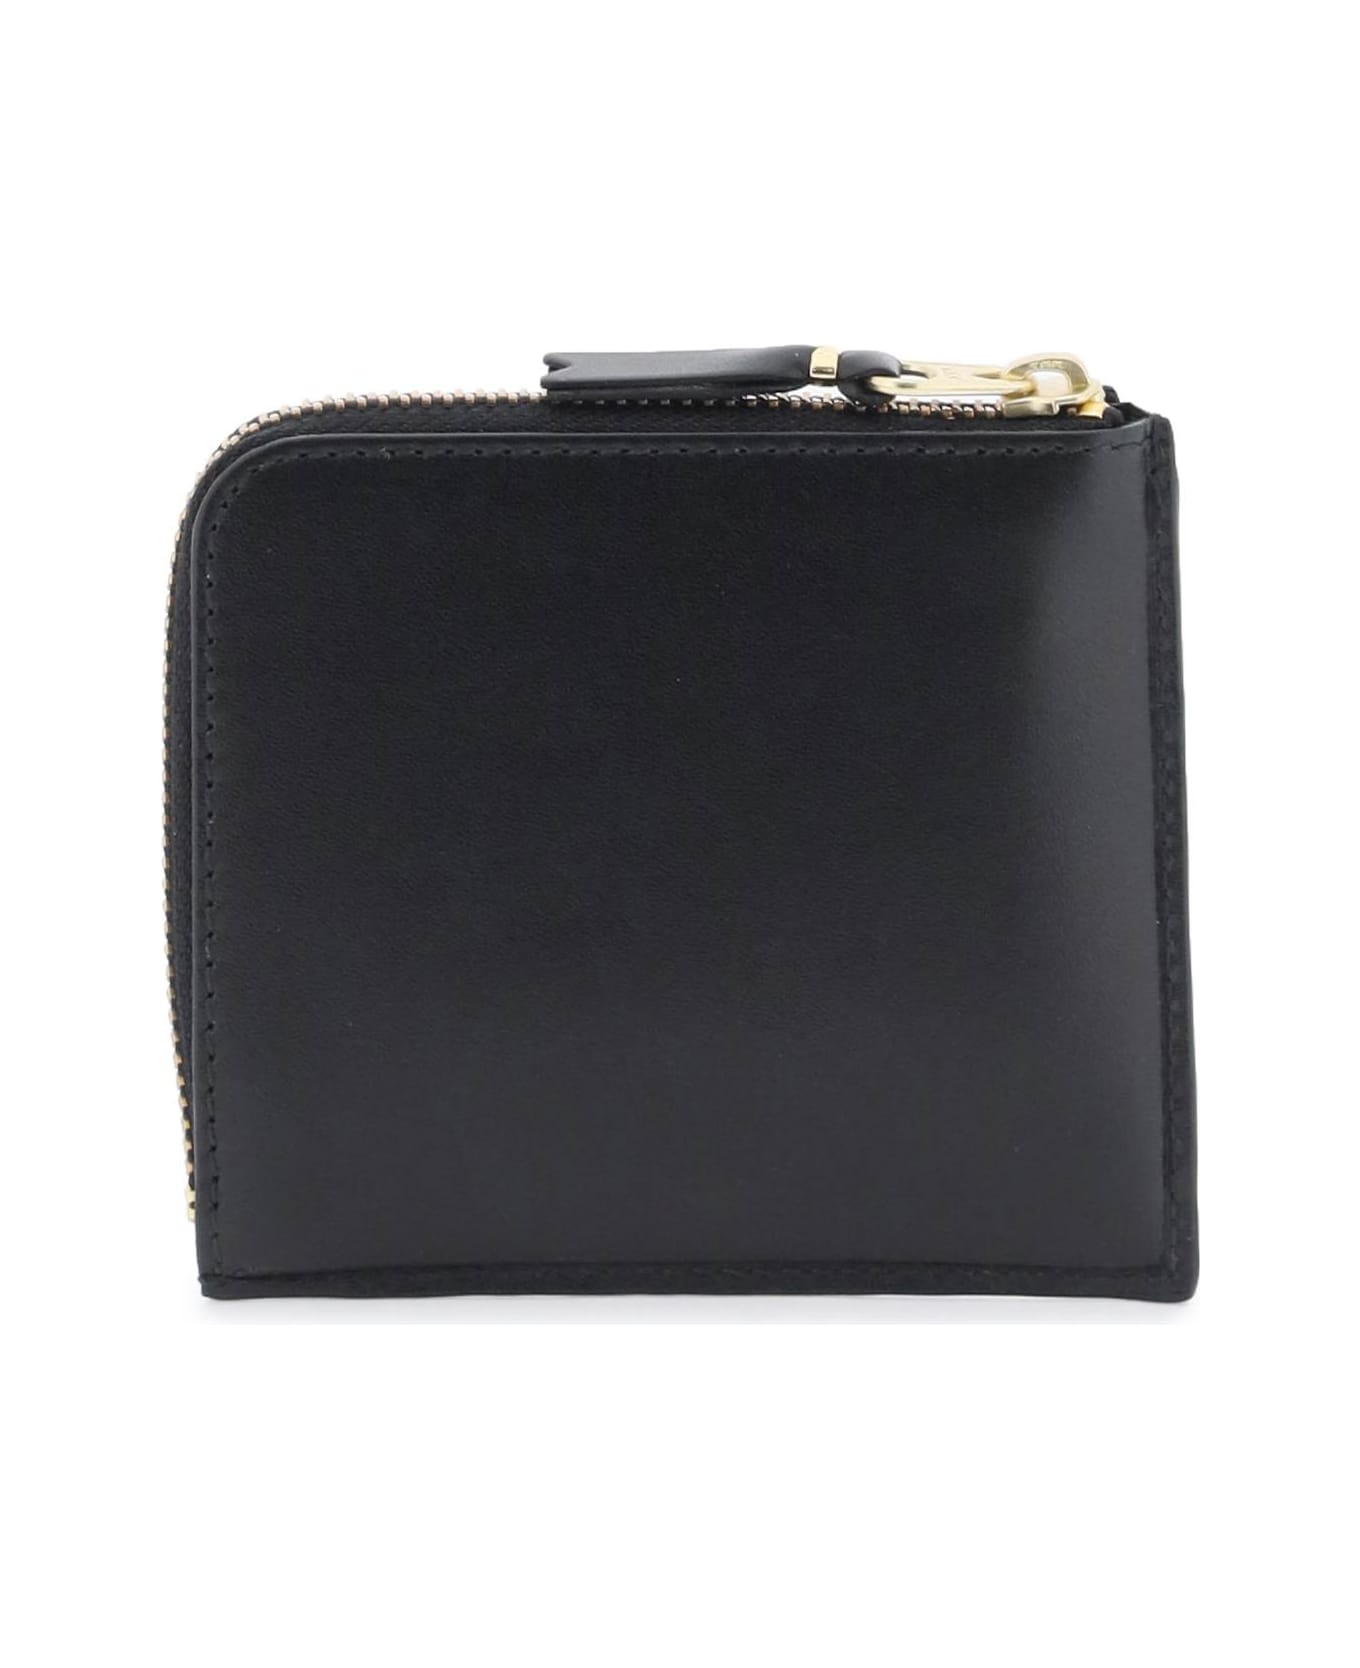 Comme des Garçons Wallet Leather Wallet - POLKA DOT PRINT (Black)